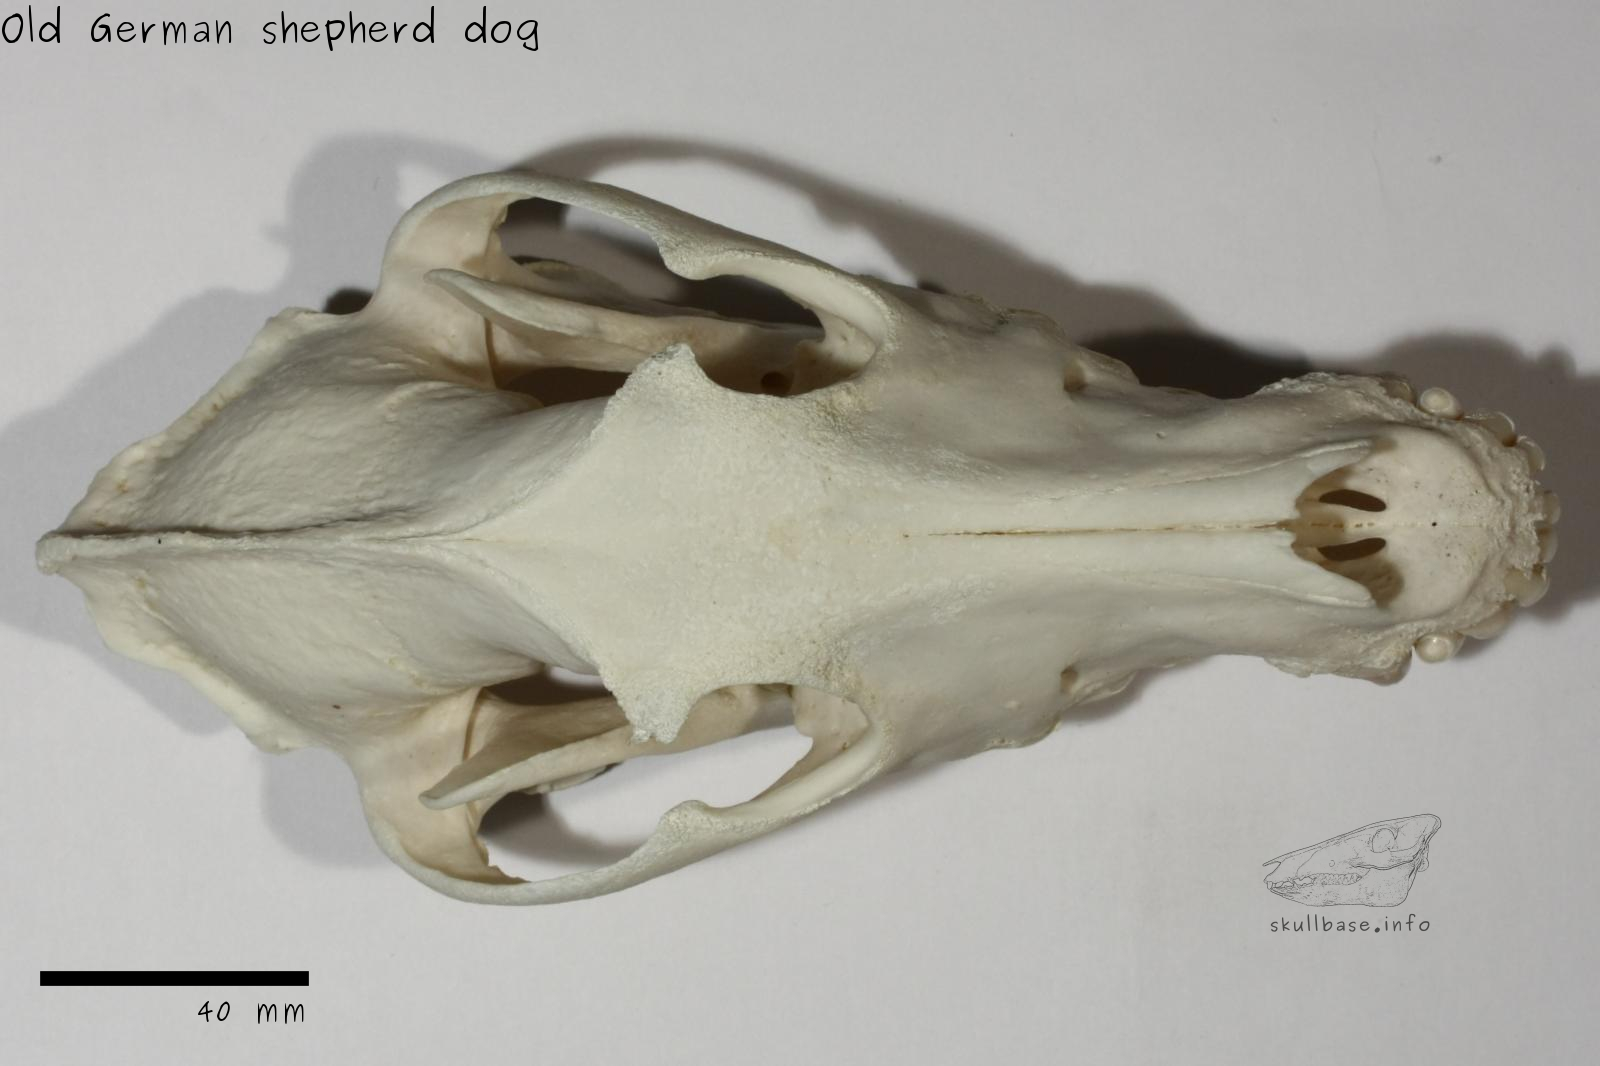 Old German shepherd dog (Canis lupus familiaris) skull dorsal view